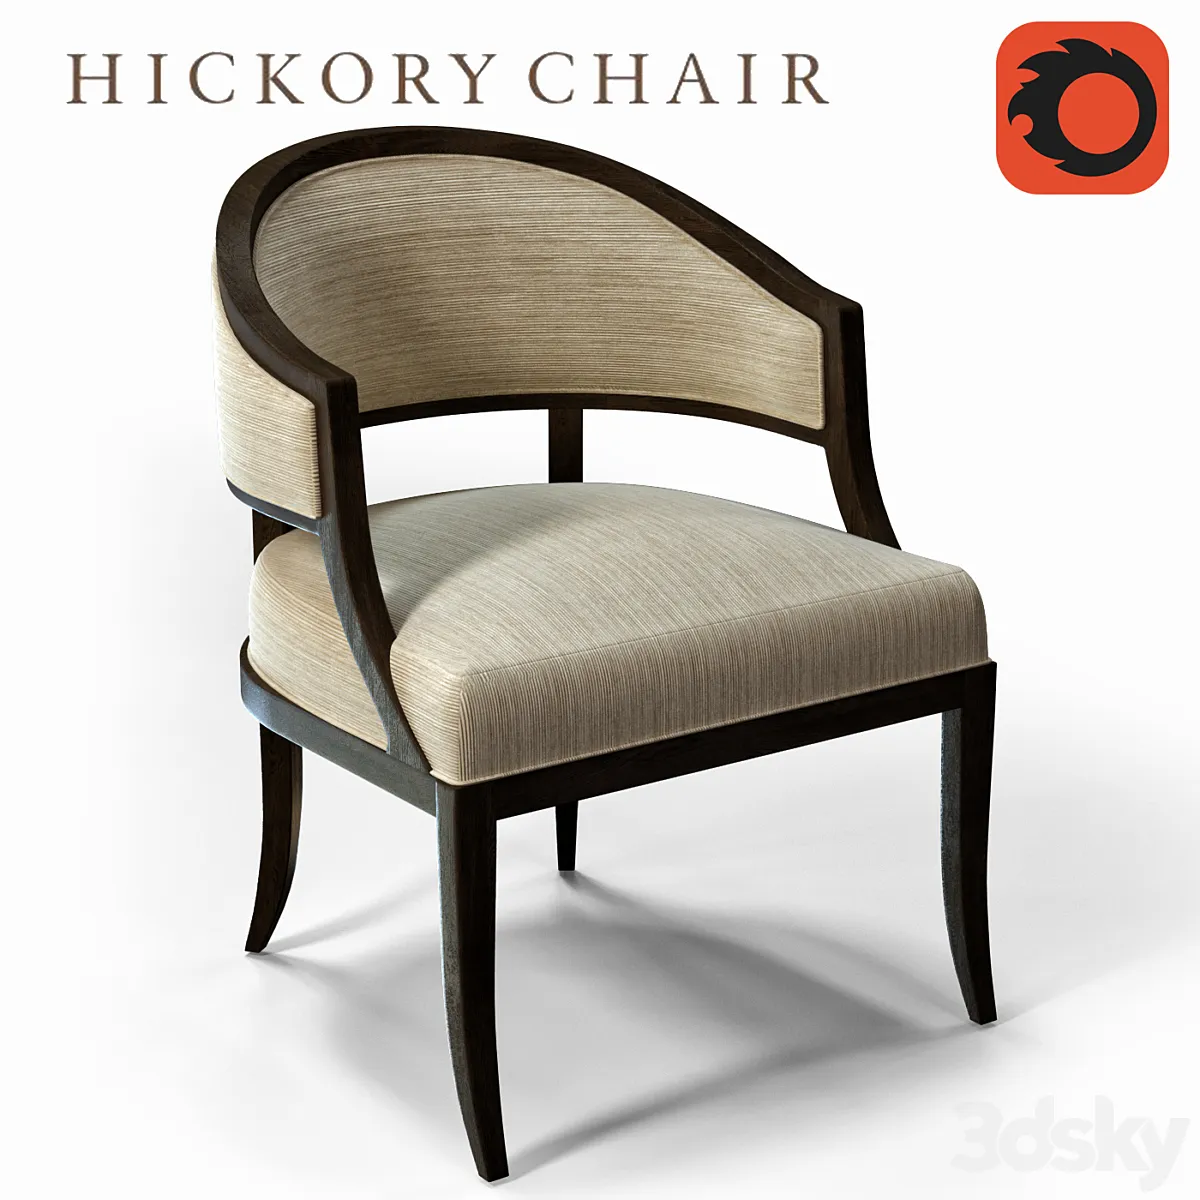 Hickory Chair Claude Chair 5412 23 1170289.594d406c46fd6